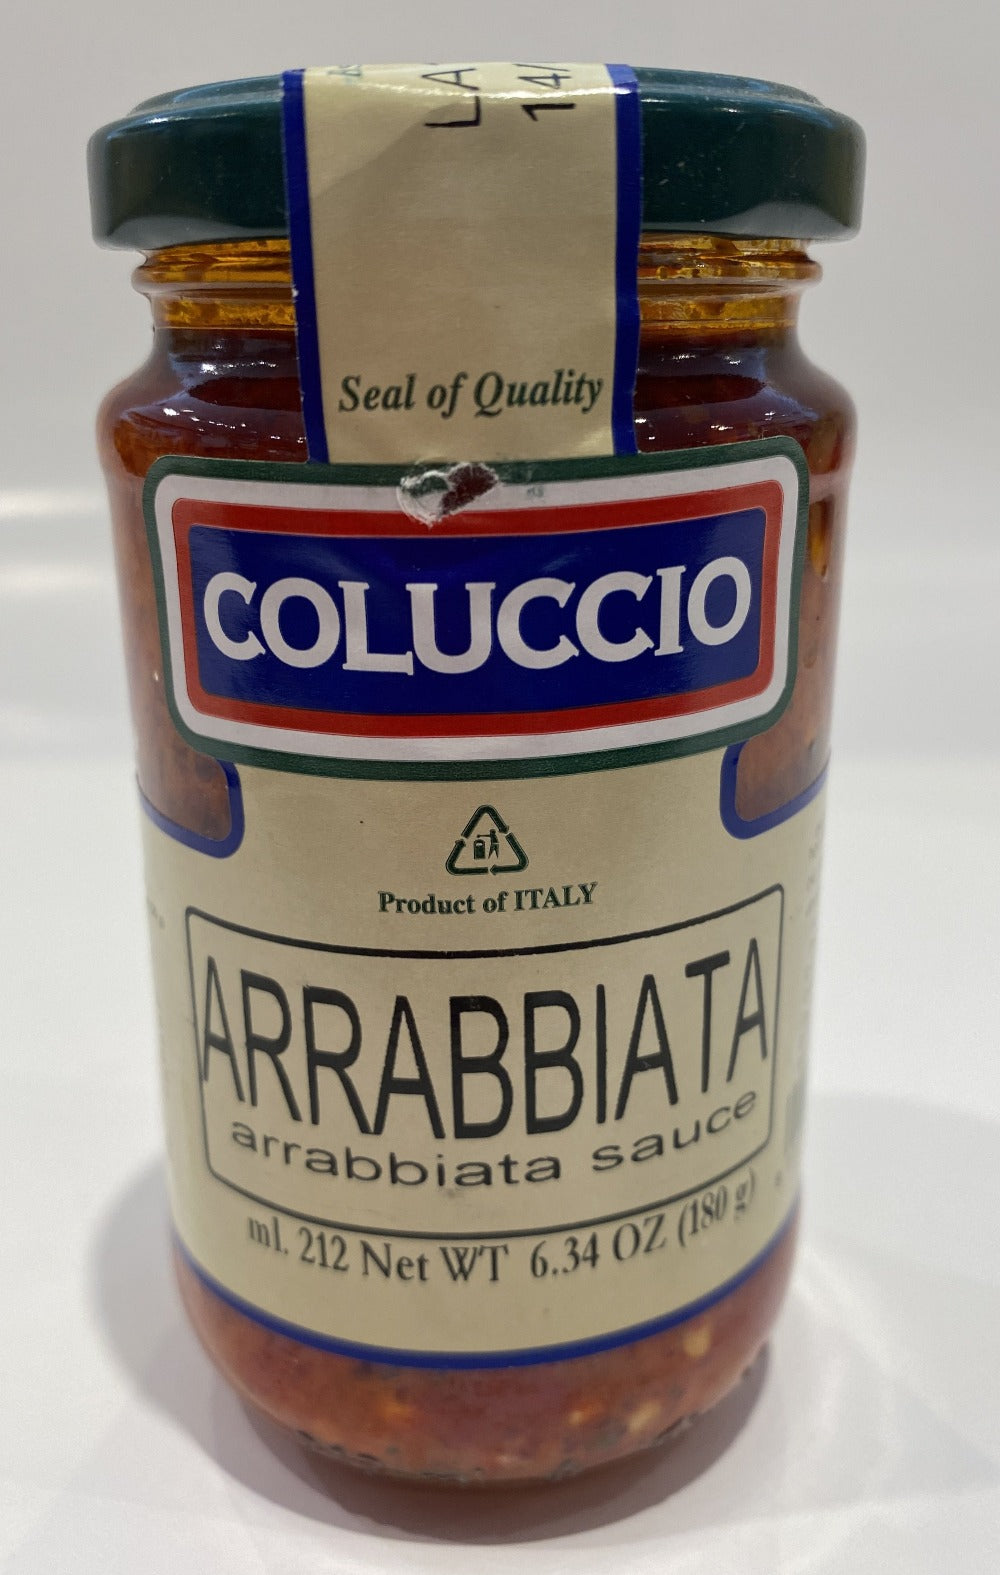 Coluccio - Arrabbiata Sauce - 6.34 oz